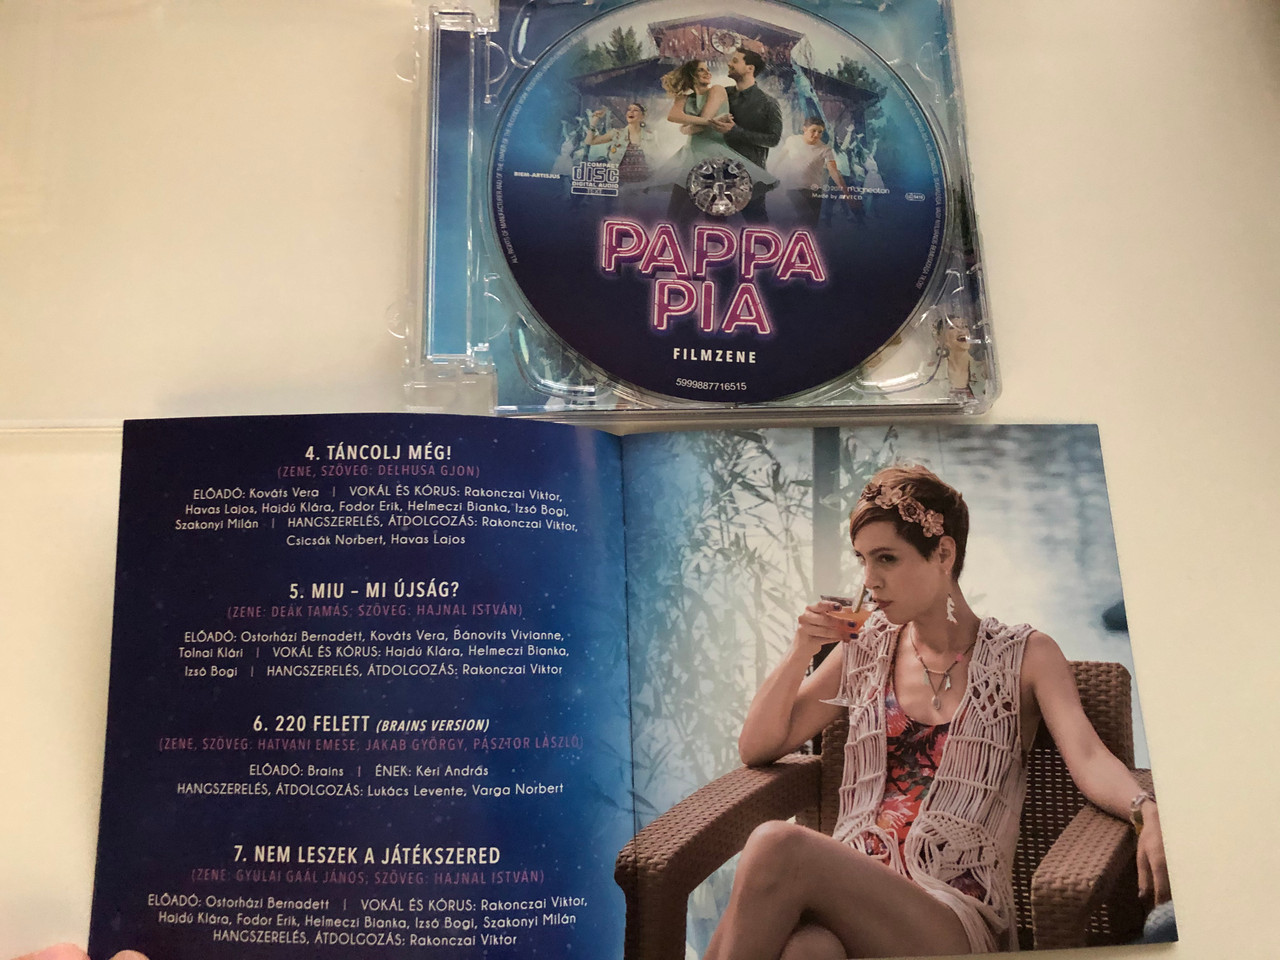 Pappa Pia Filmzene / Magneoton Audio CD 2017 / 5999887716515 / Radics Gigi,  Király Viktor, Brains, Kelemen Kabátban - bibleinmylanguage